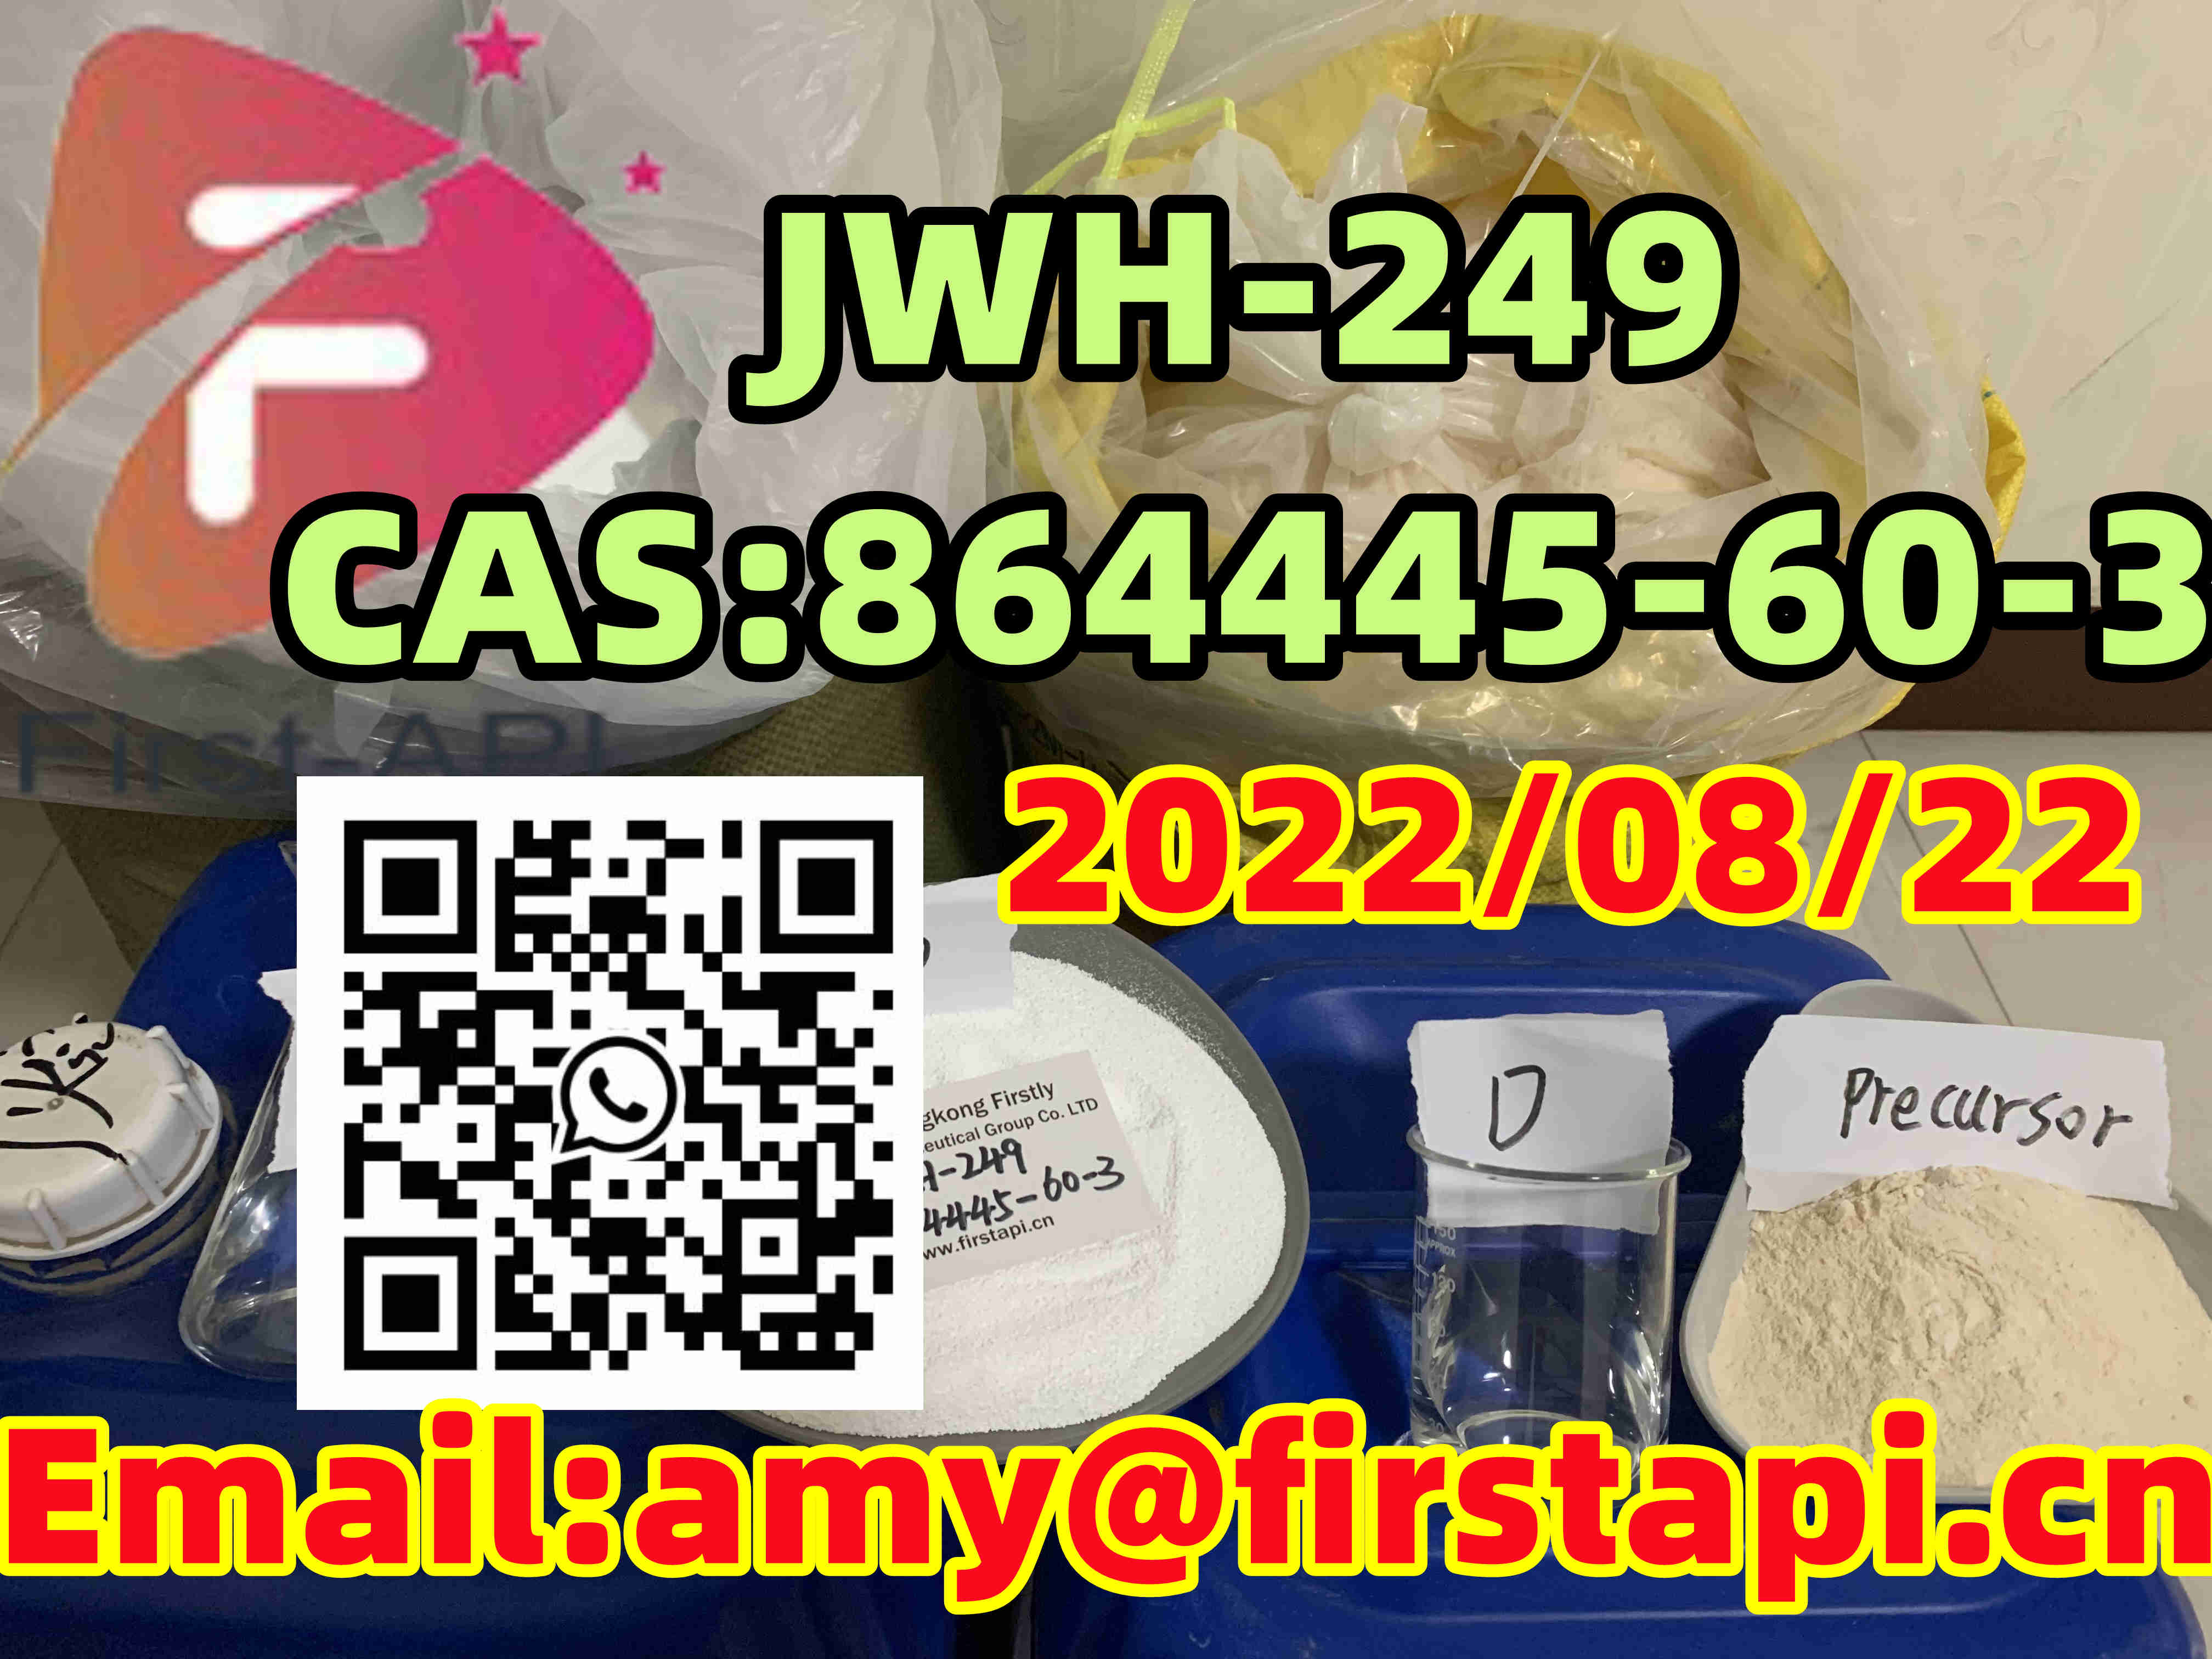 CAS:864445-60-3,JWH-249,free sample,high quality,low price - photo